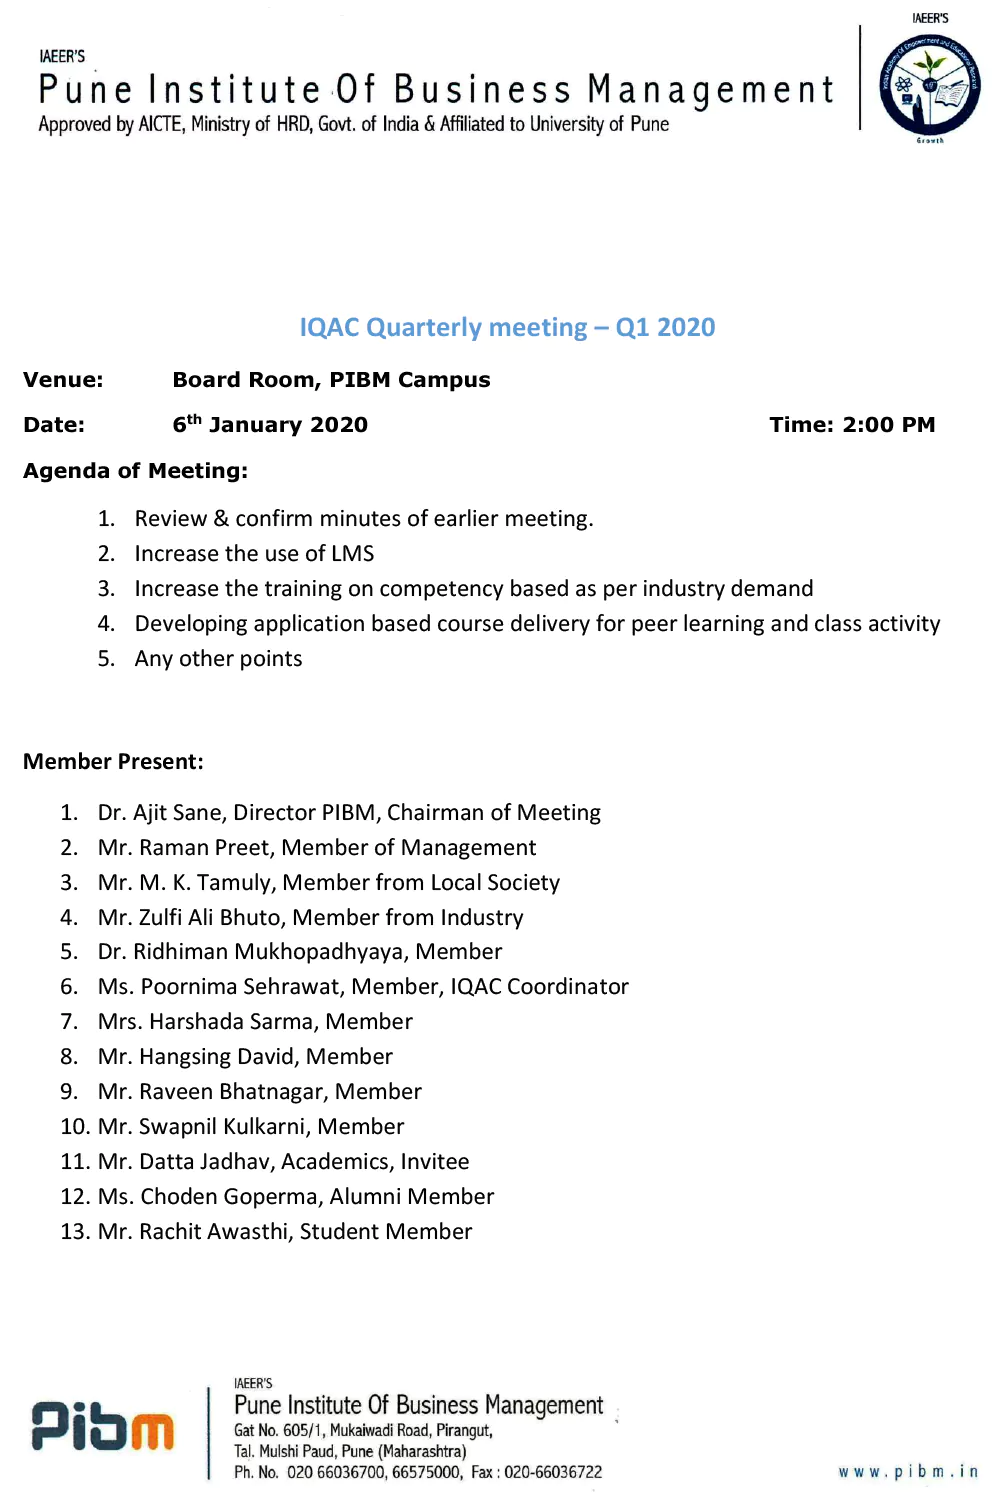 IQAC Quarterly meeting - 6th January 2020